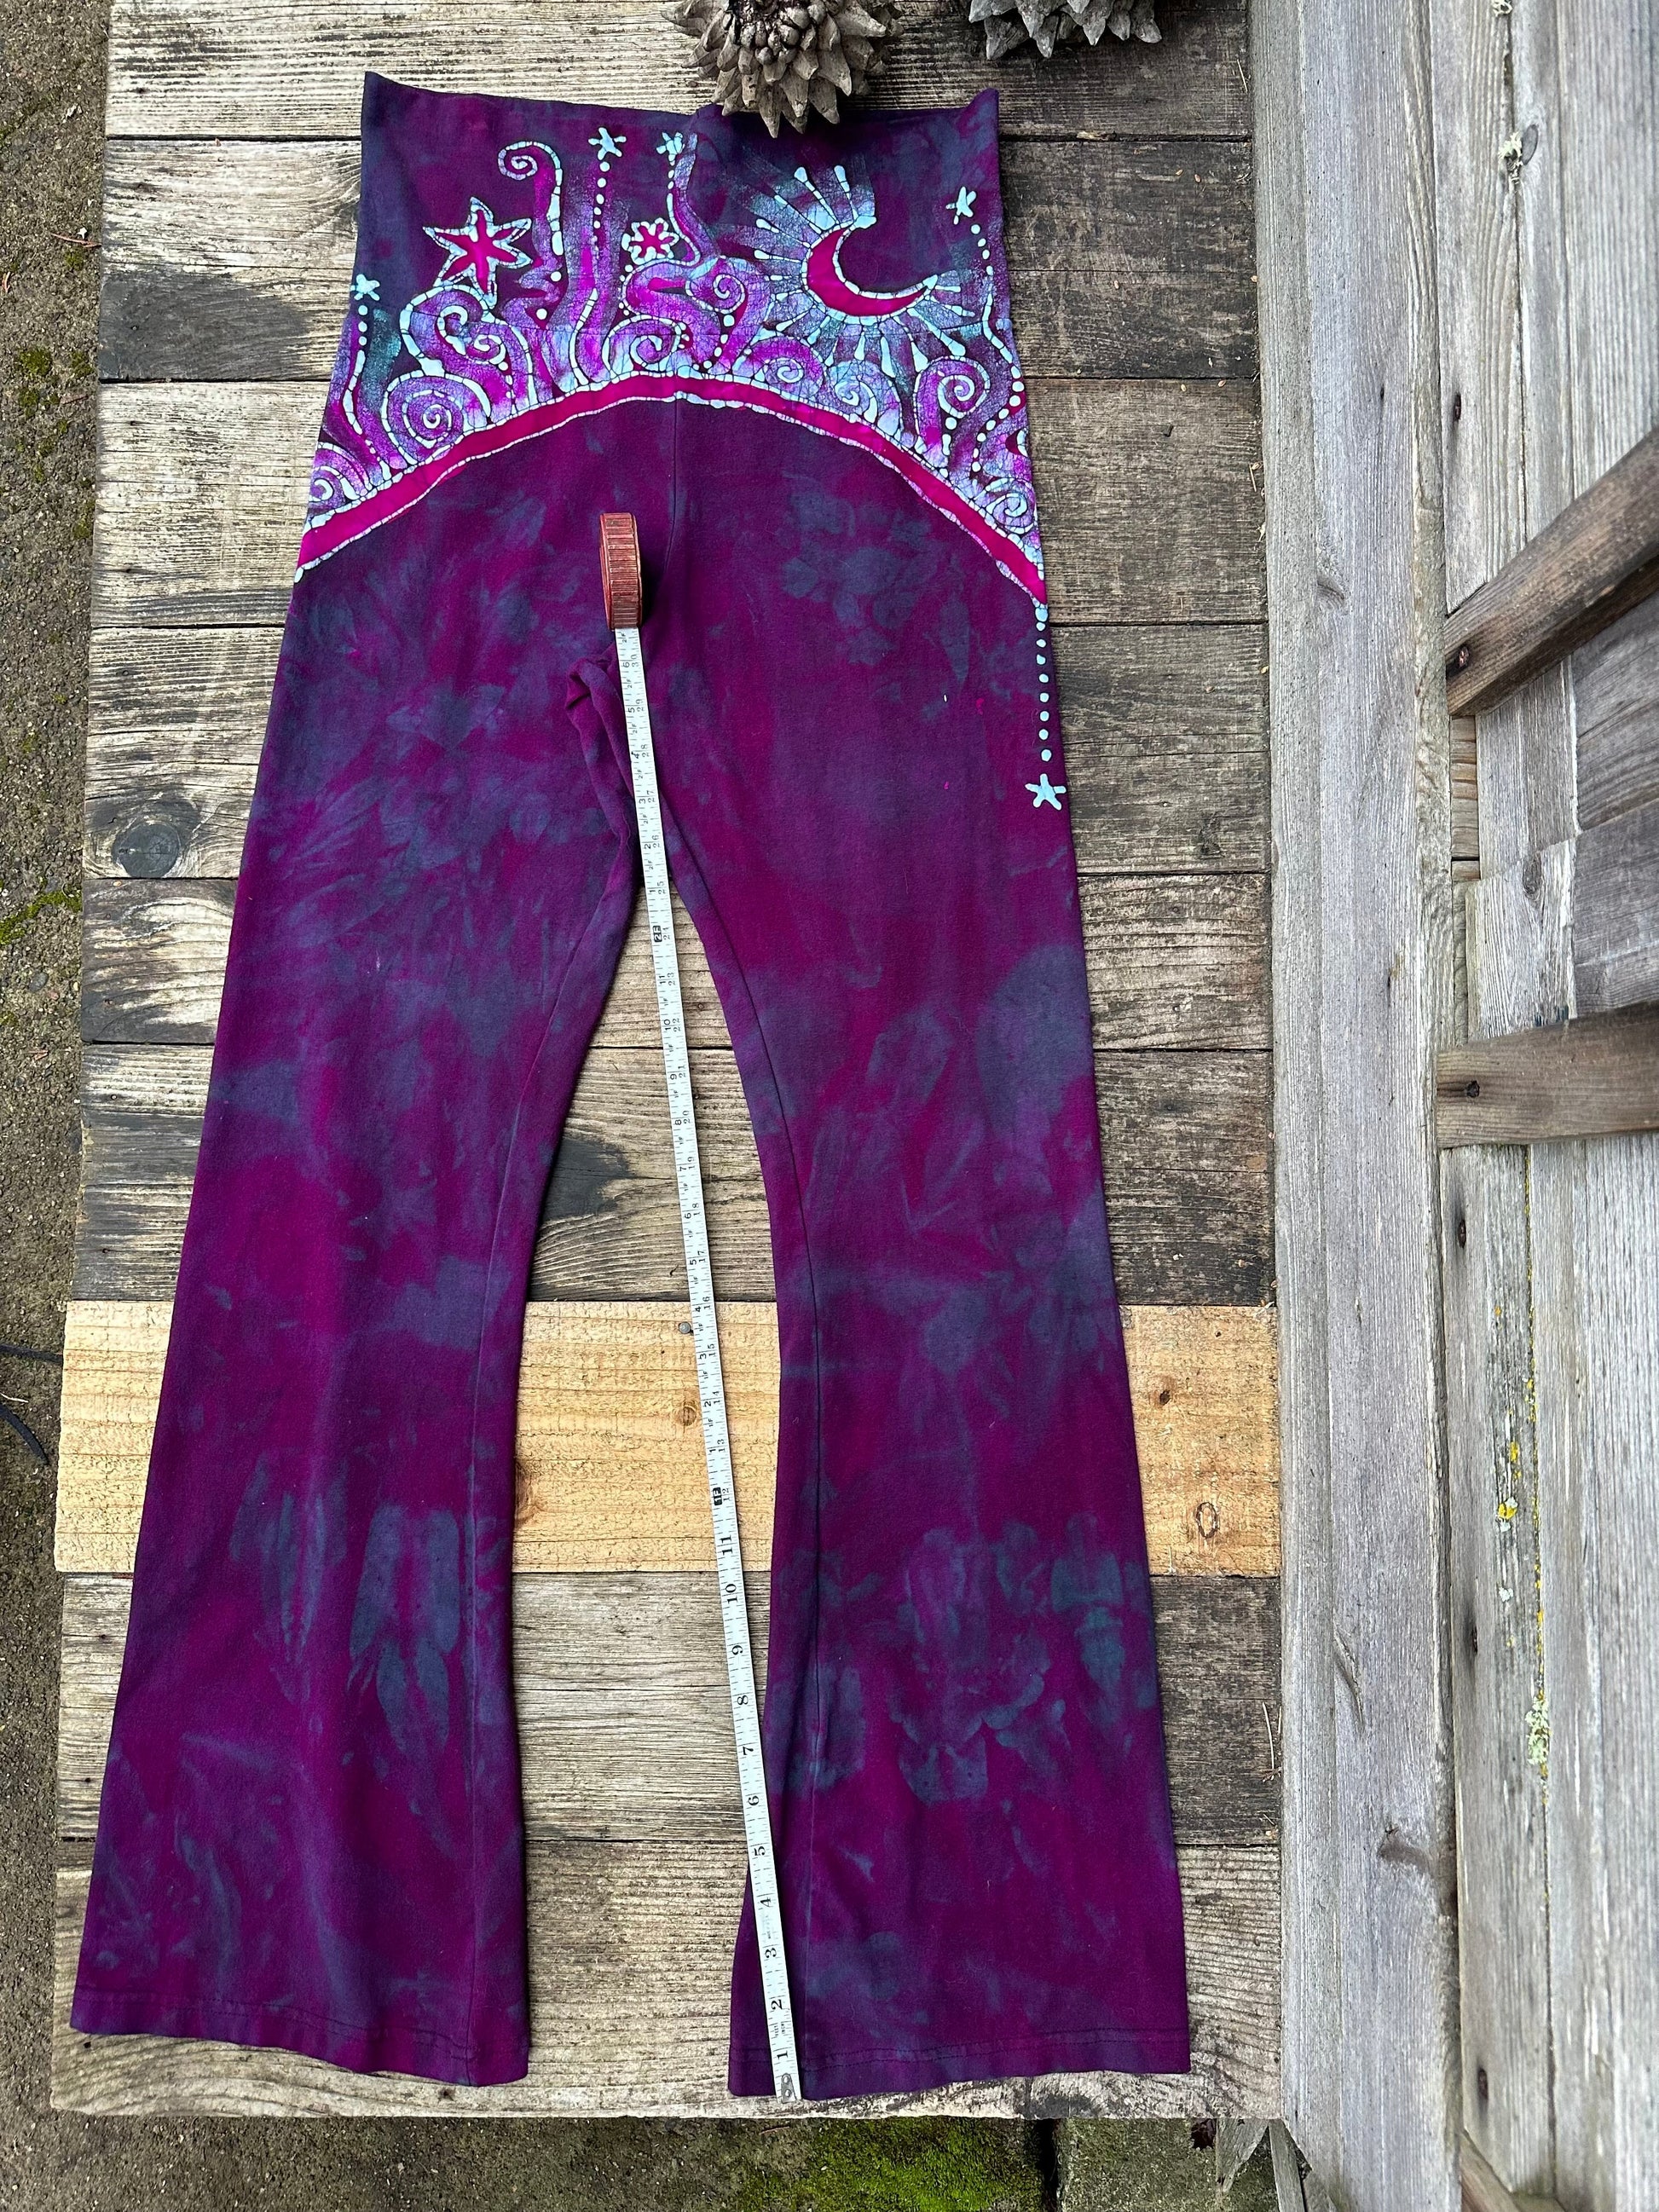 Teal and Magenta Moon Rainbow Stretchy Movement Pants - Size XL Yoga Pants batikwalla XL 